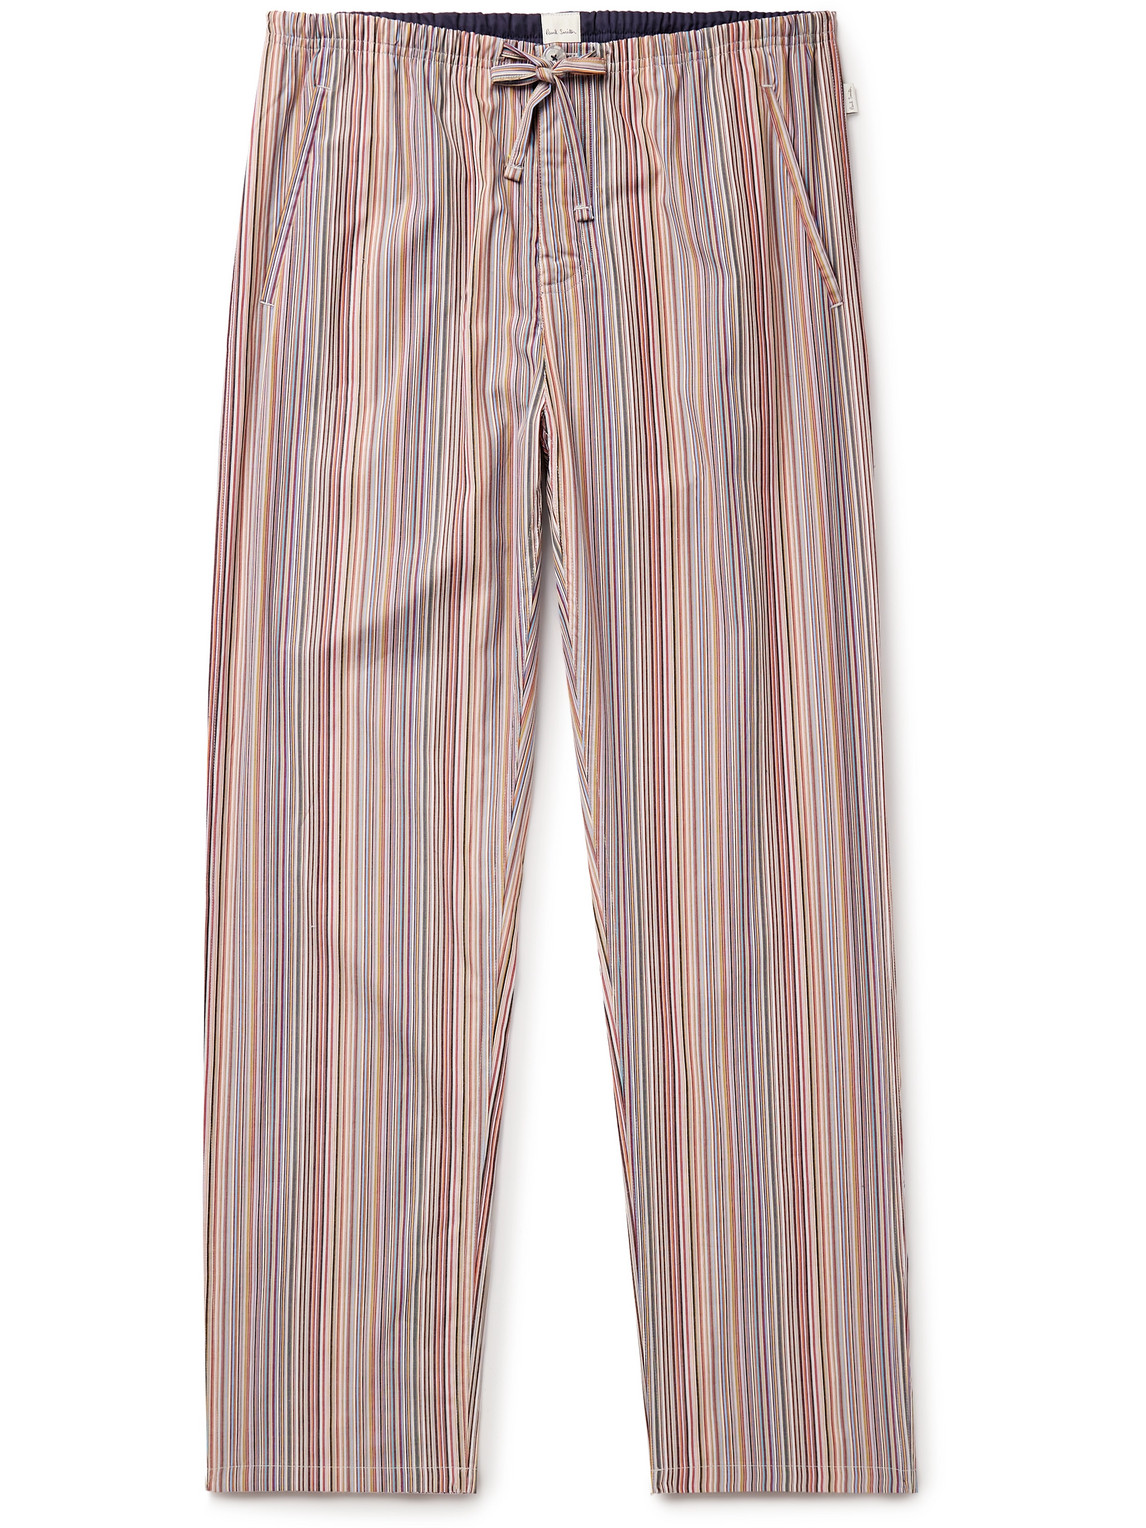 Paul Smith - Striped Cotton Pyjama Trousers - Men - Red - M von Paul Smith